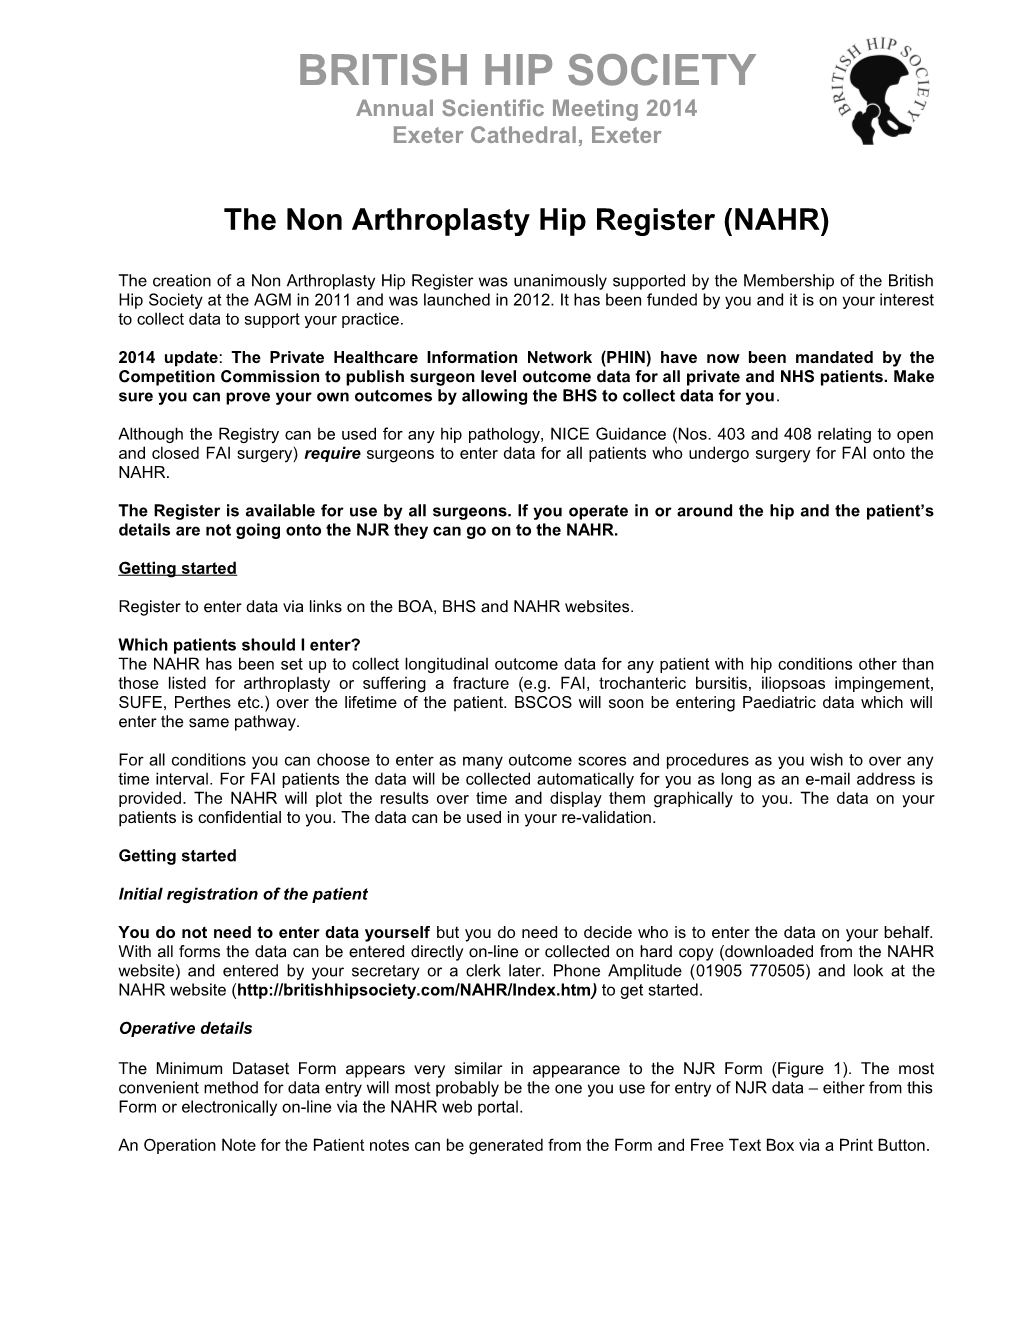 The Non Arthroplasty Hip Register (NAHR)